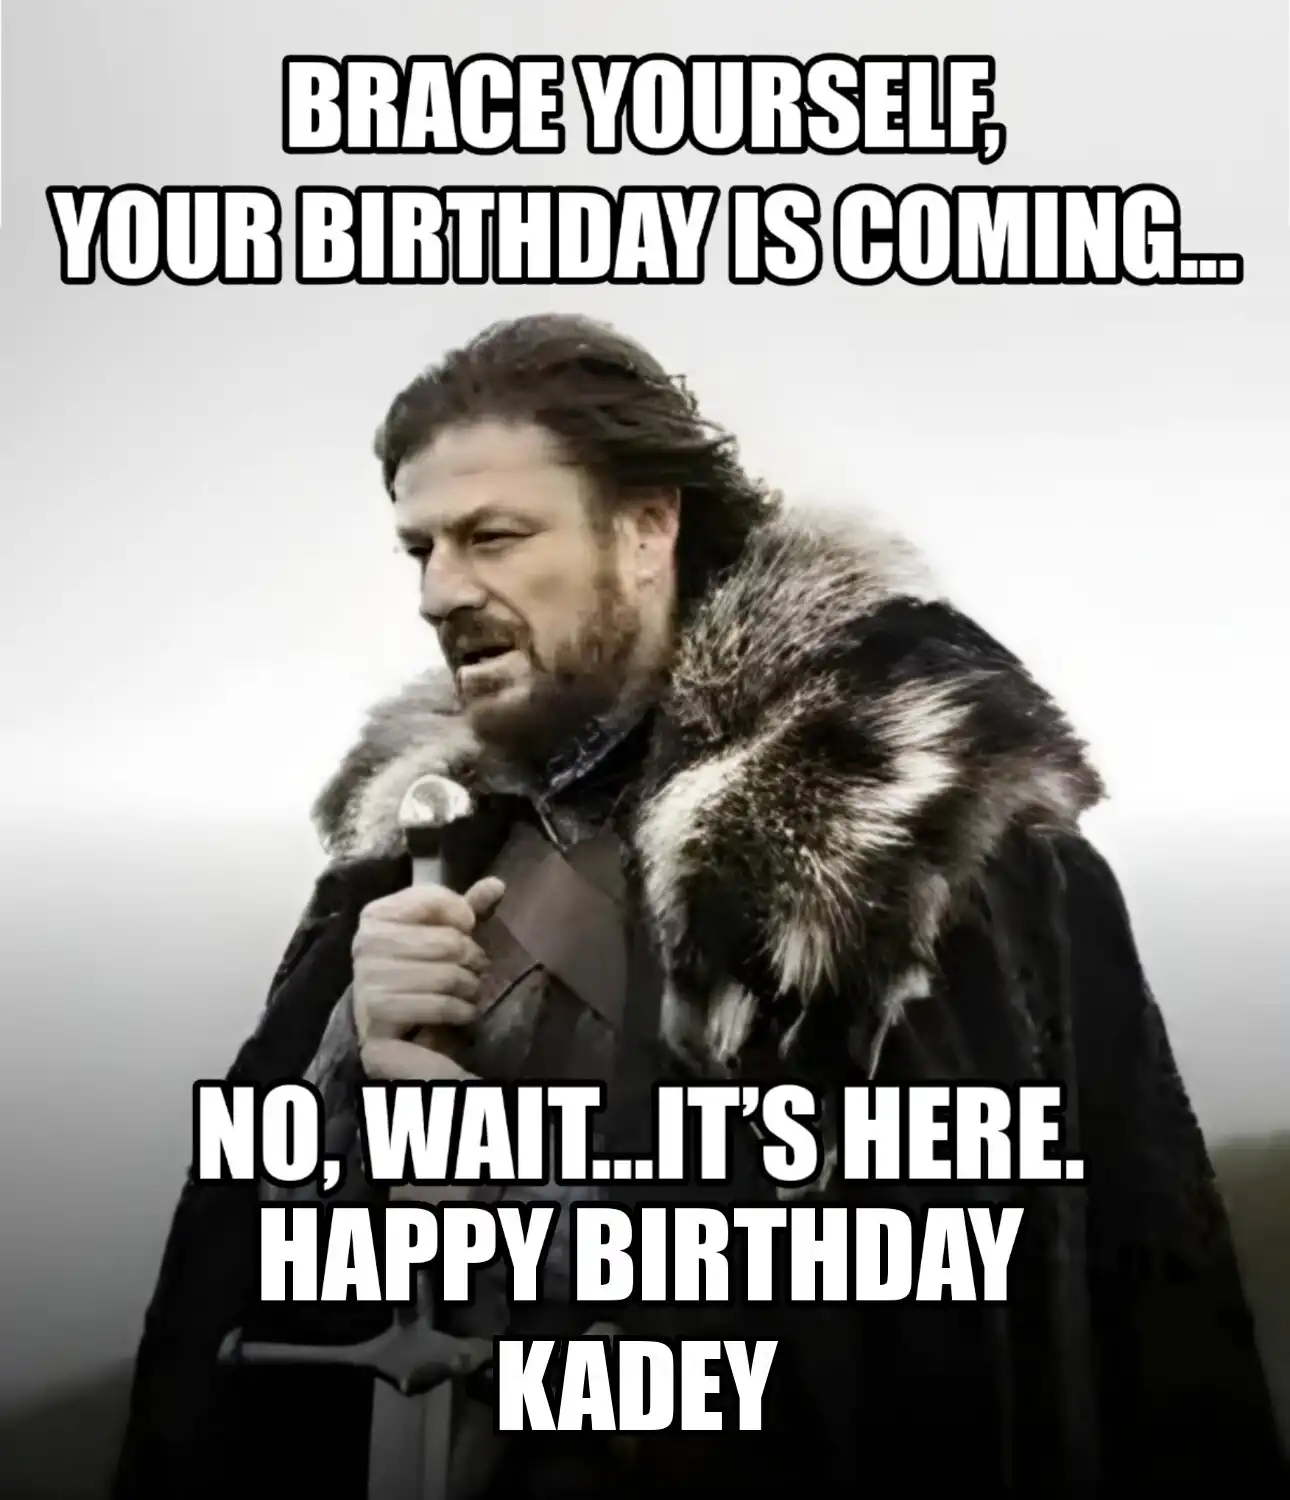 Happy Birthday Kadey Brace Yourself Your Birthday Is Coming Meme